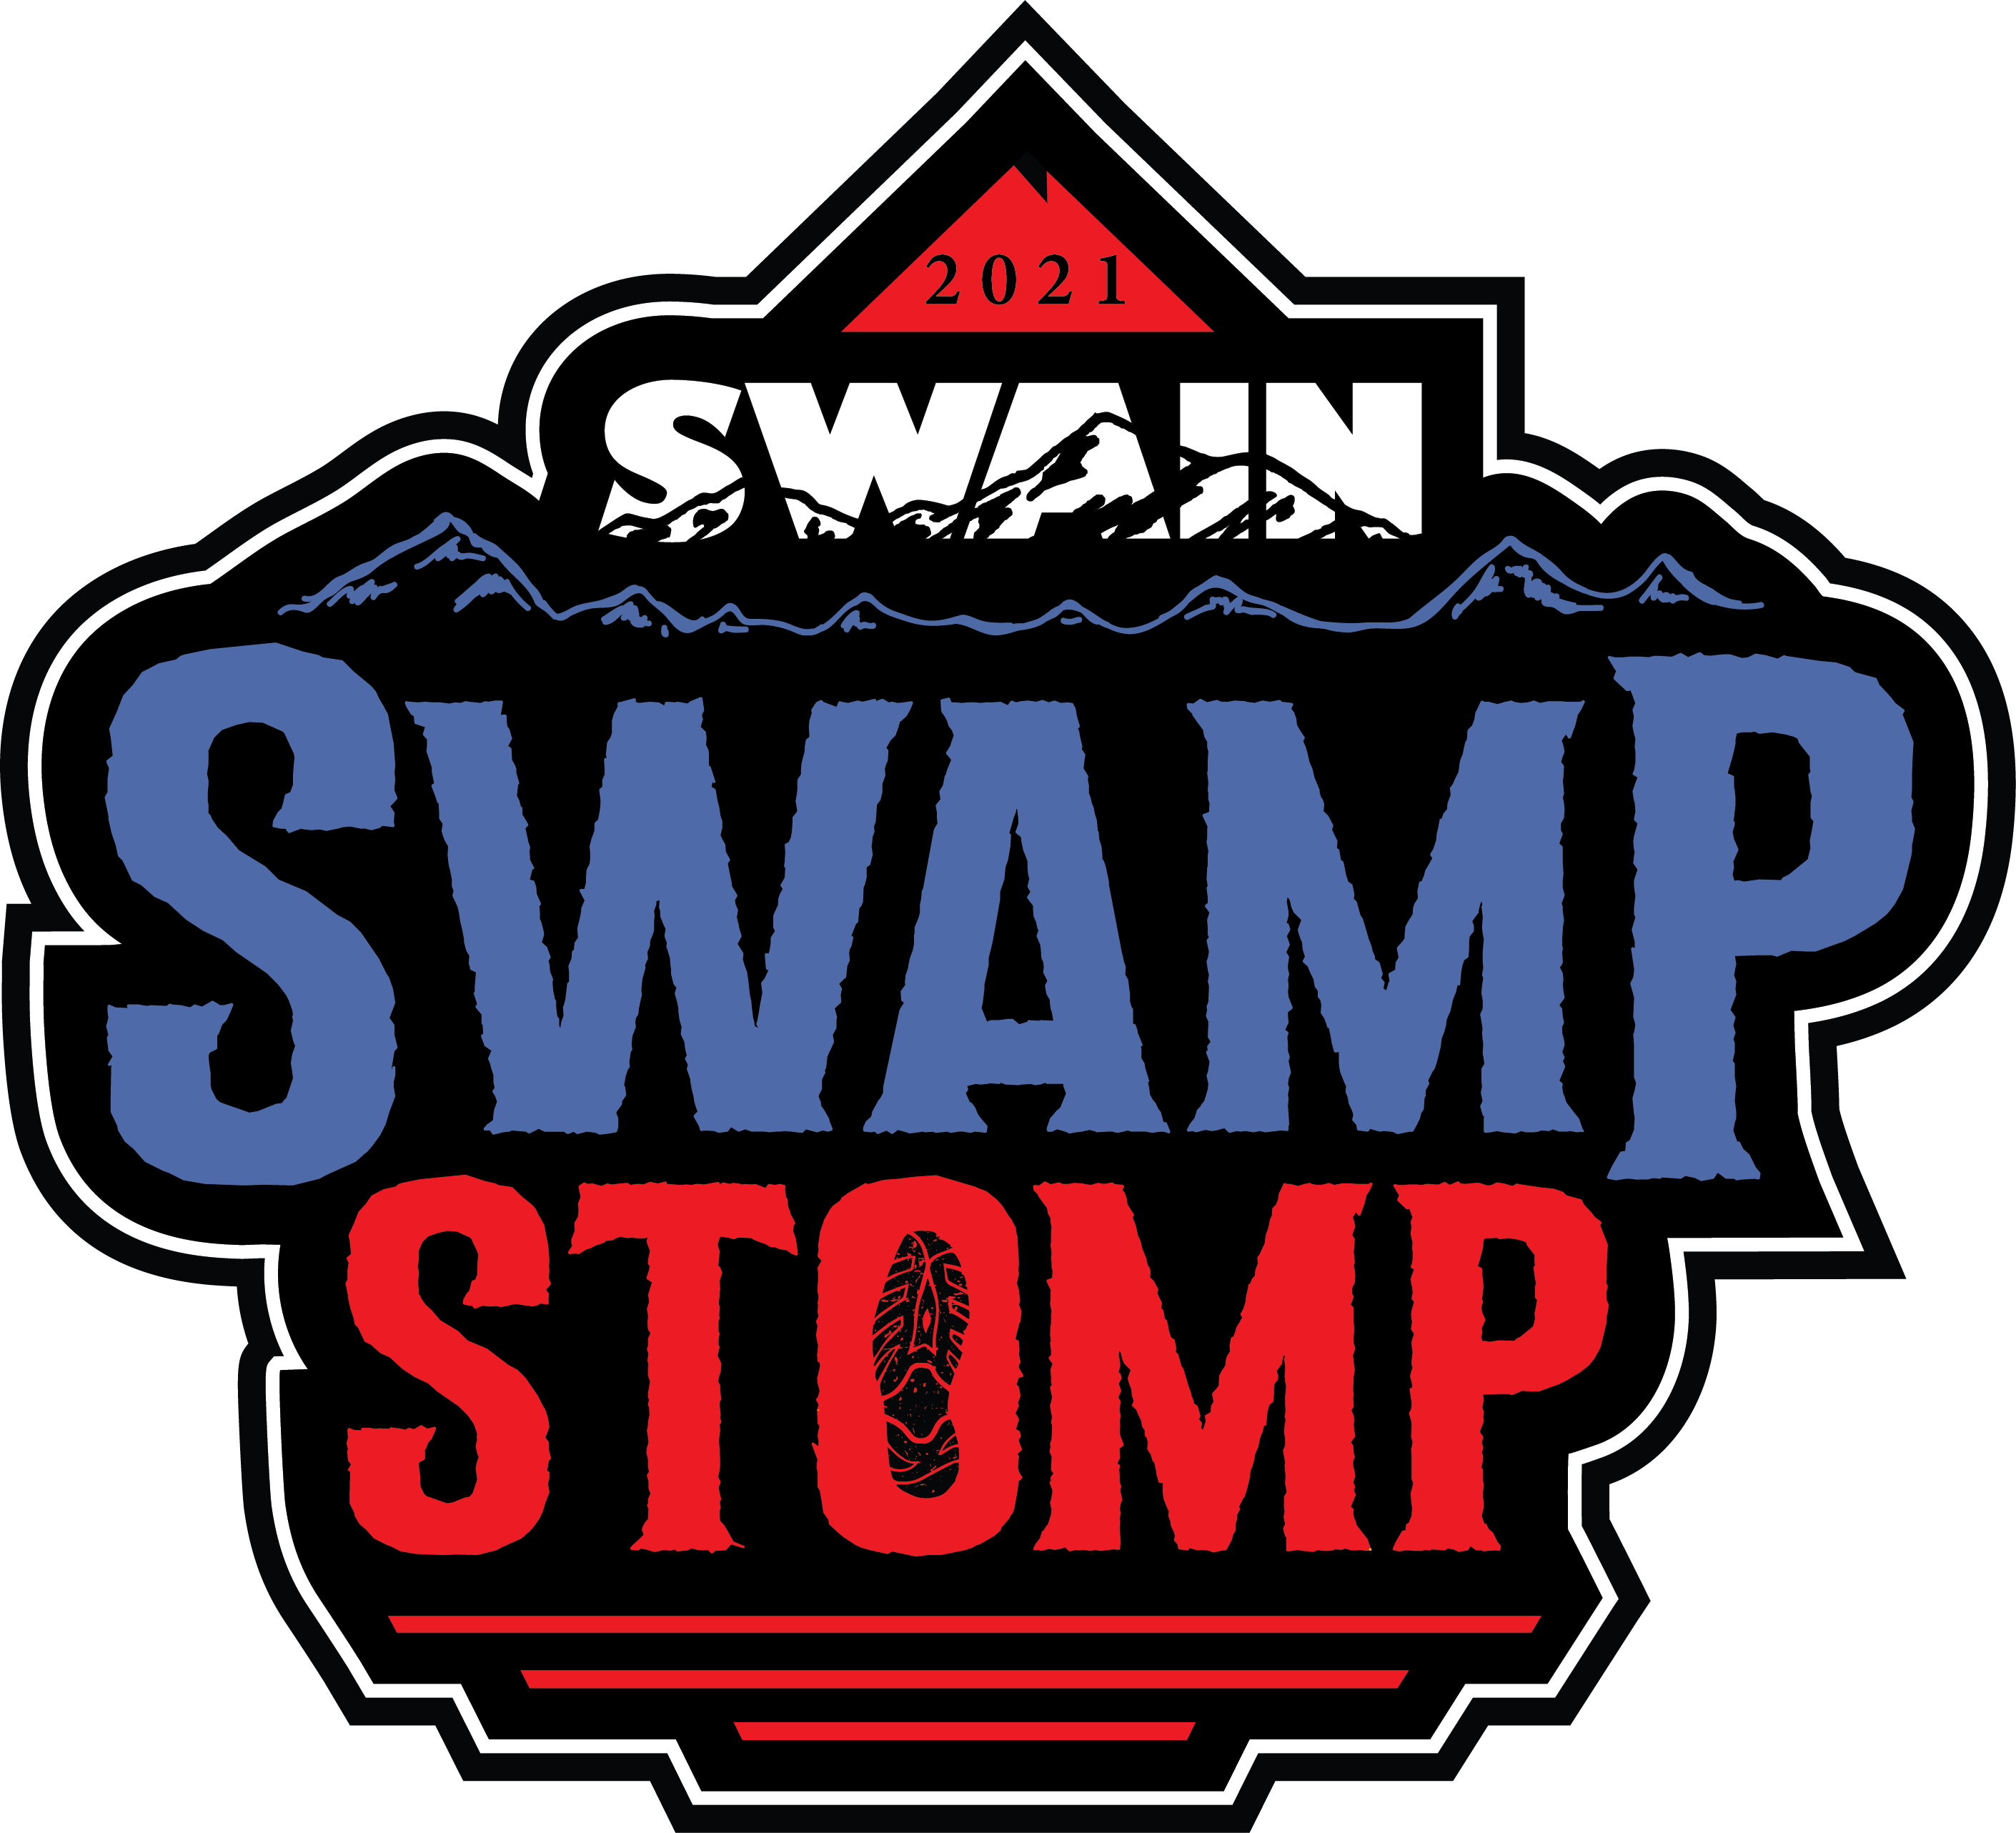 Swain Swamp Stomp